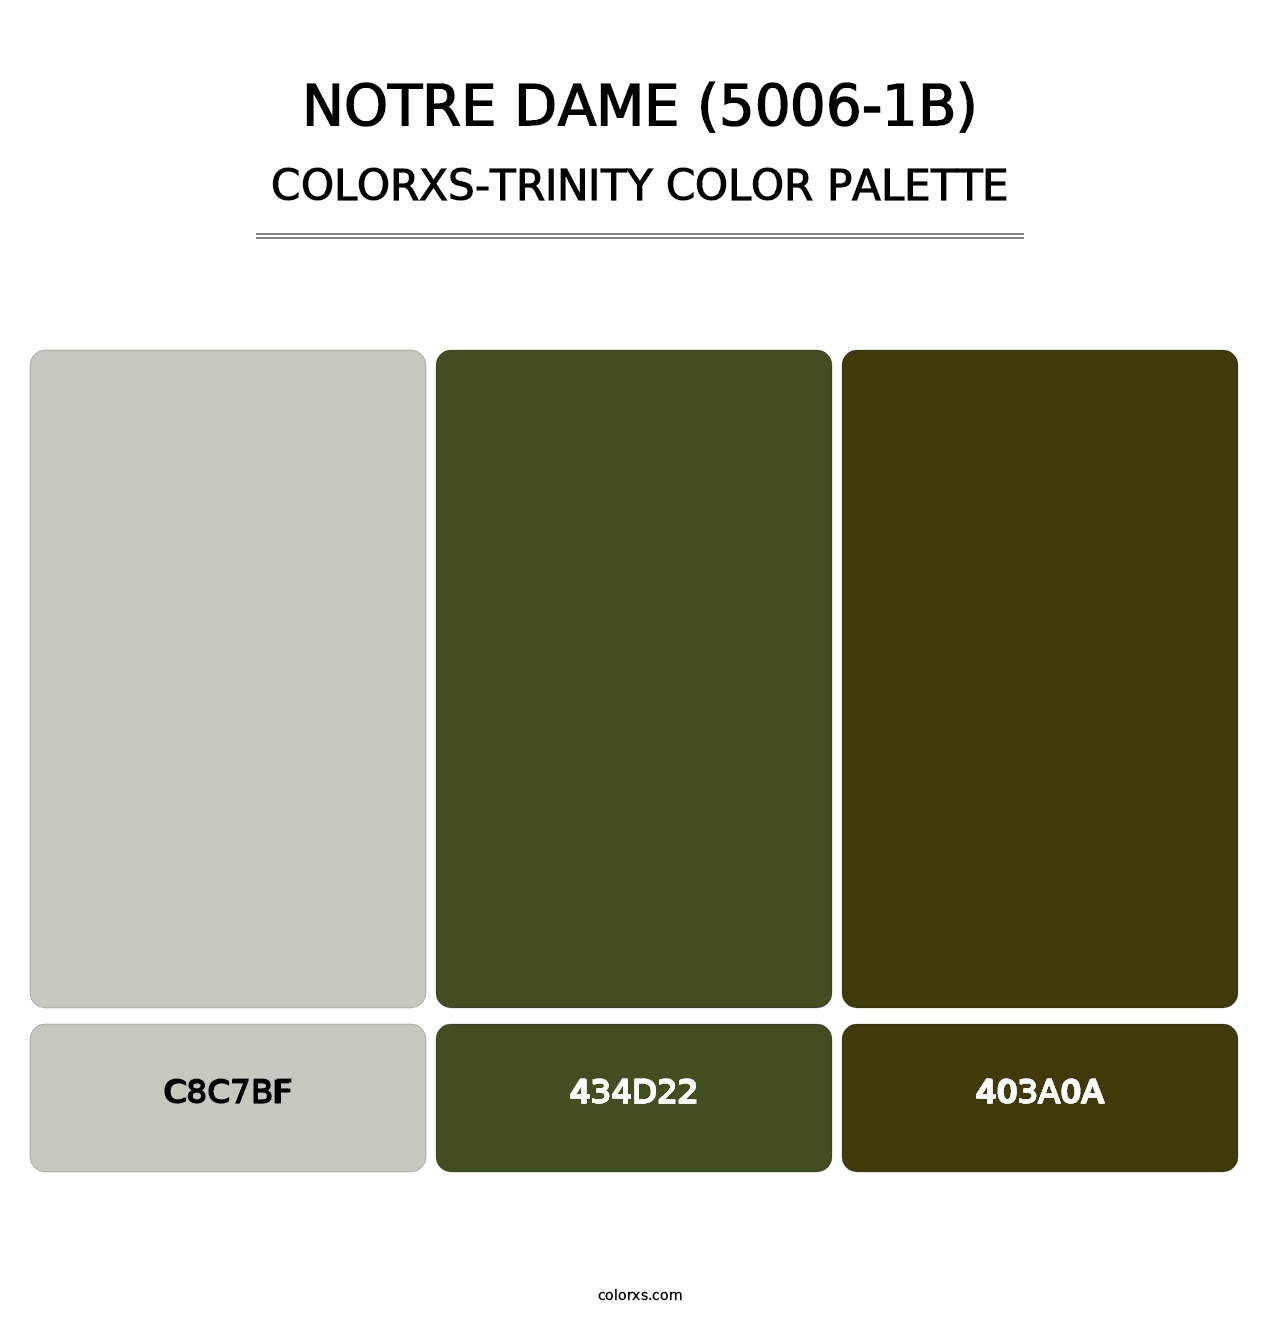 Notre Dame (5006-1B) - Colorxs Trinity Palette